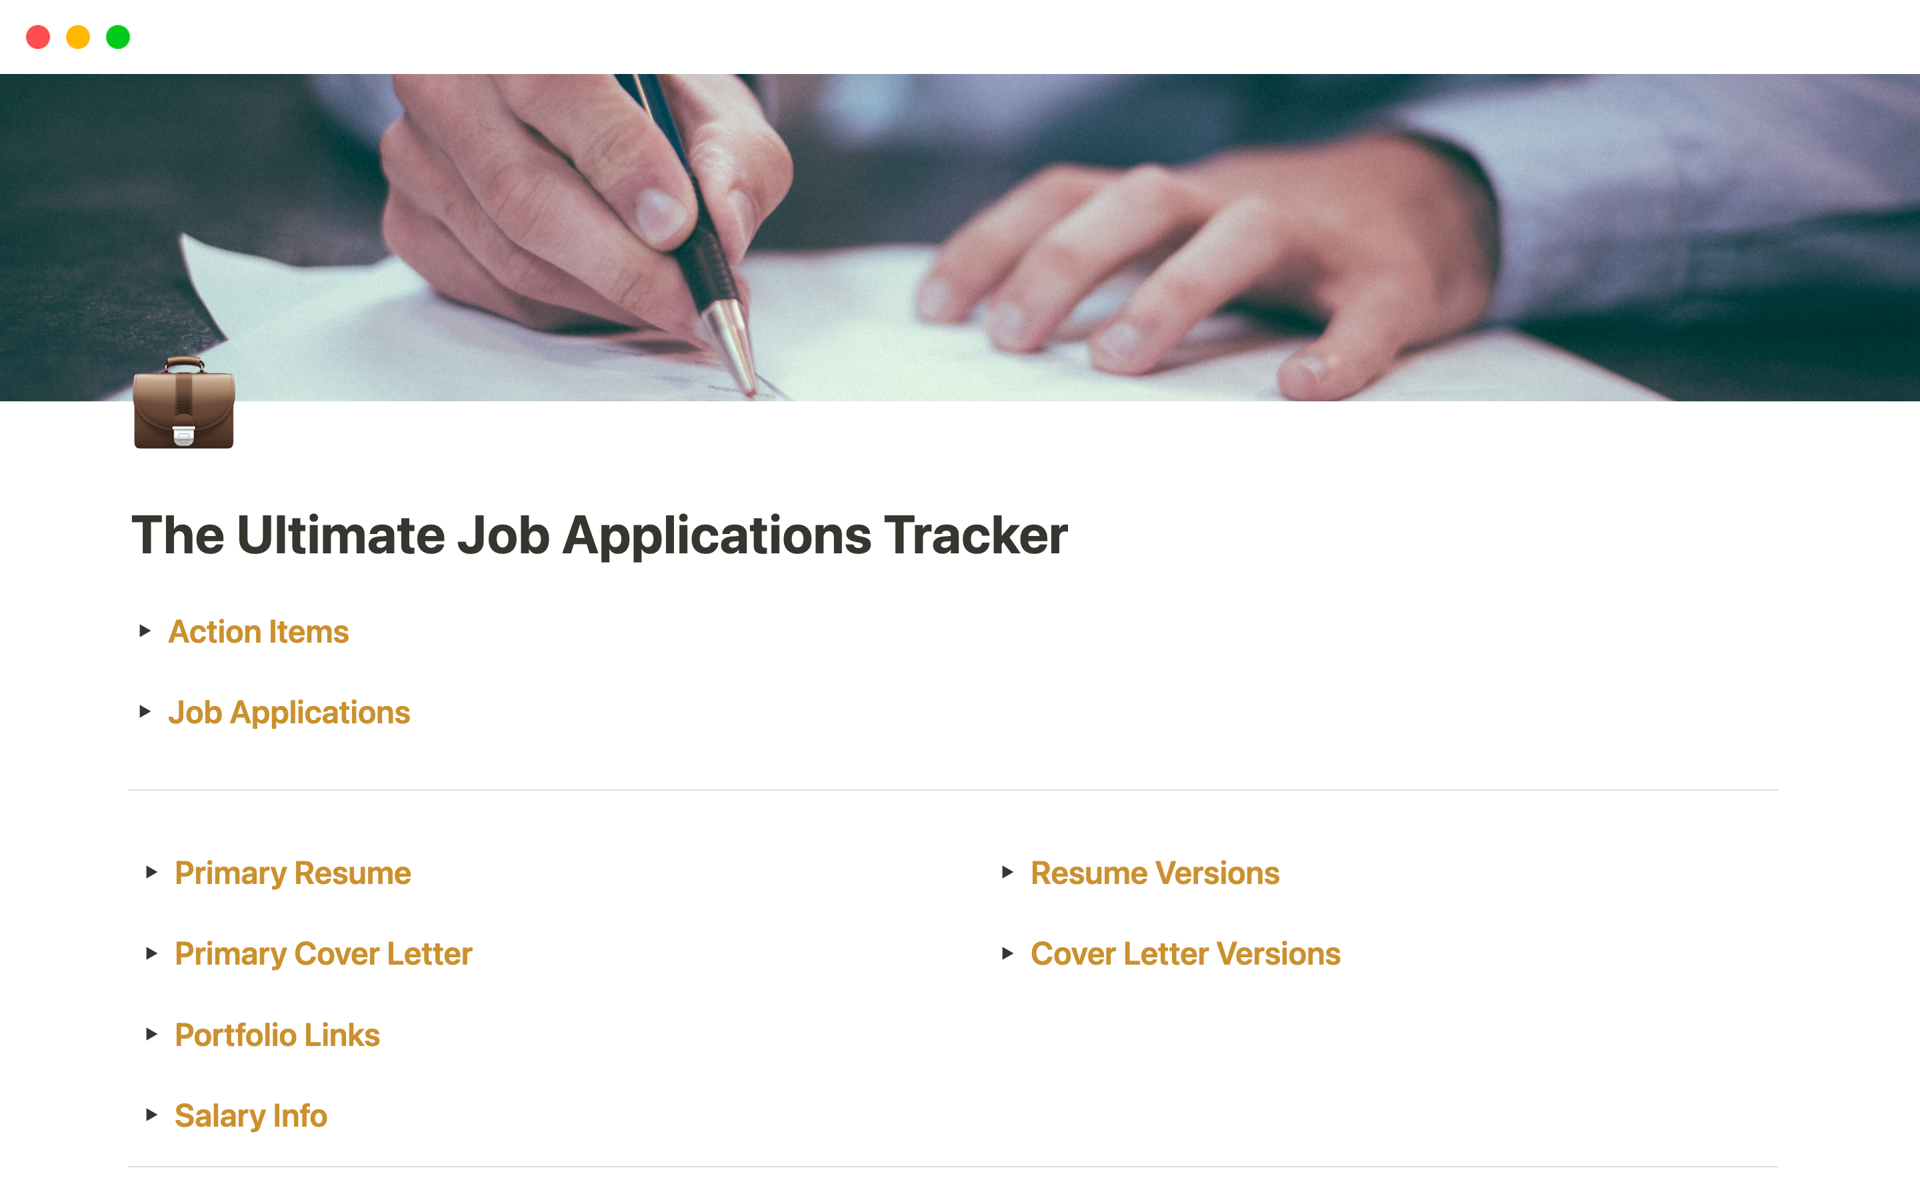 The Ultimate Job Applications Tracker님의 템플릿 미리보기